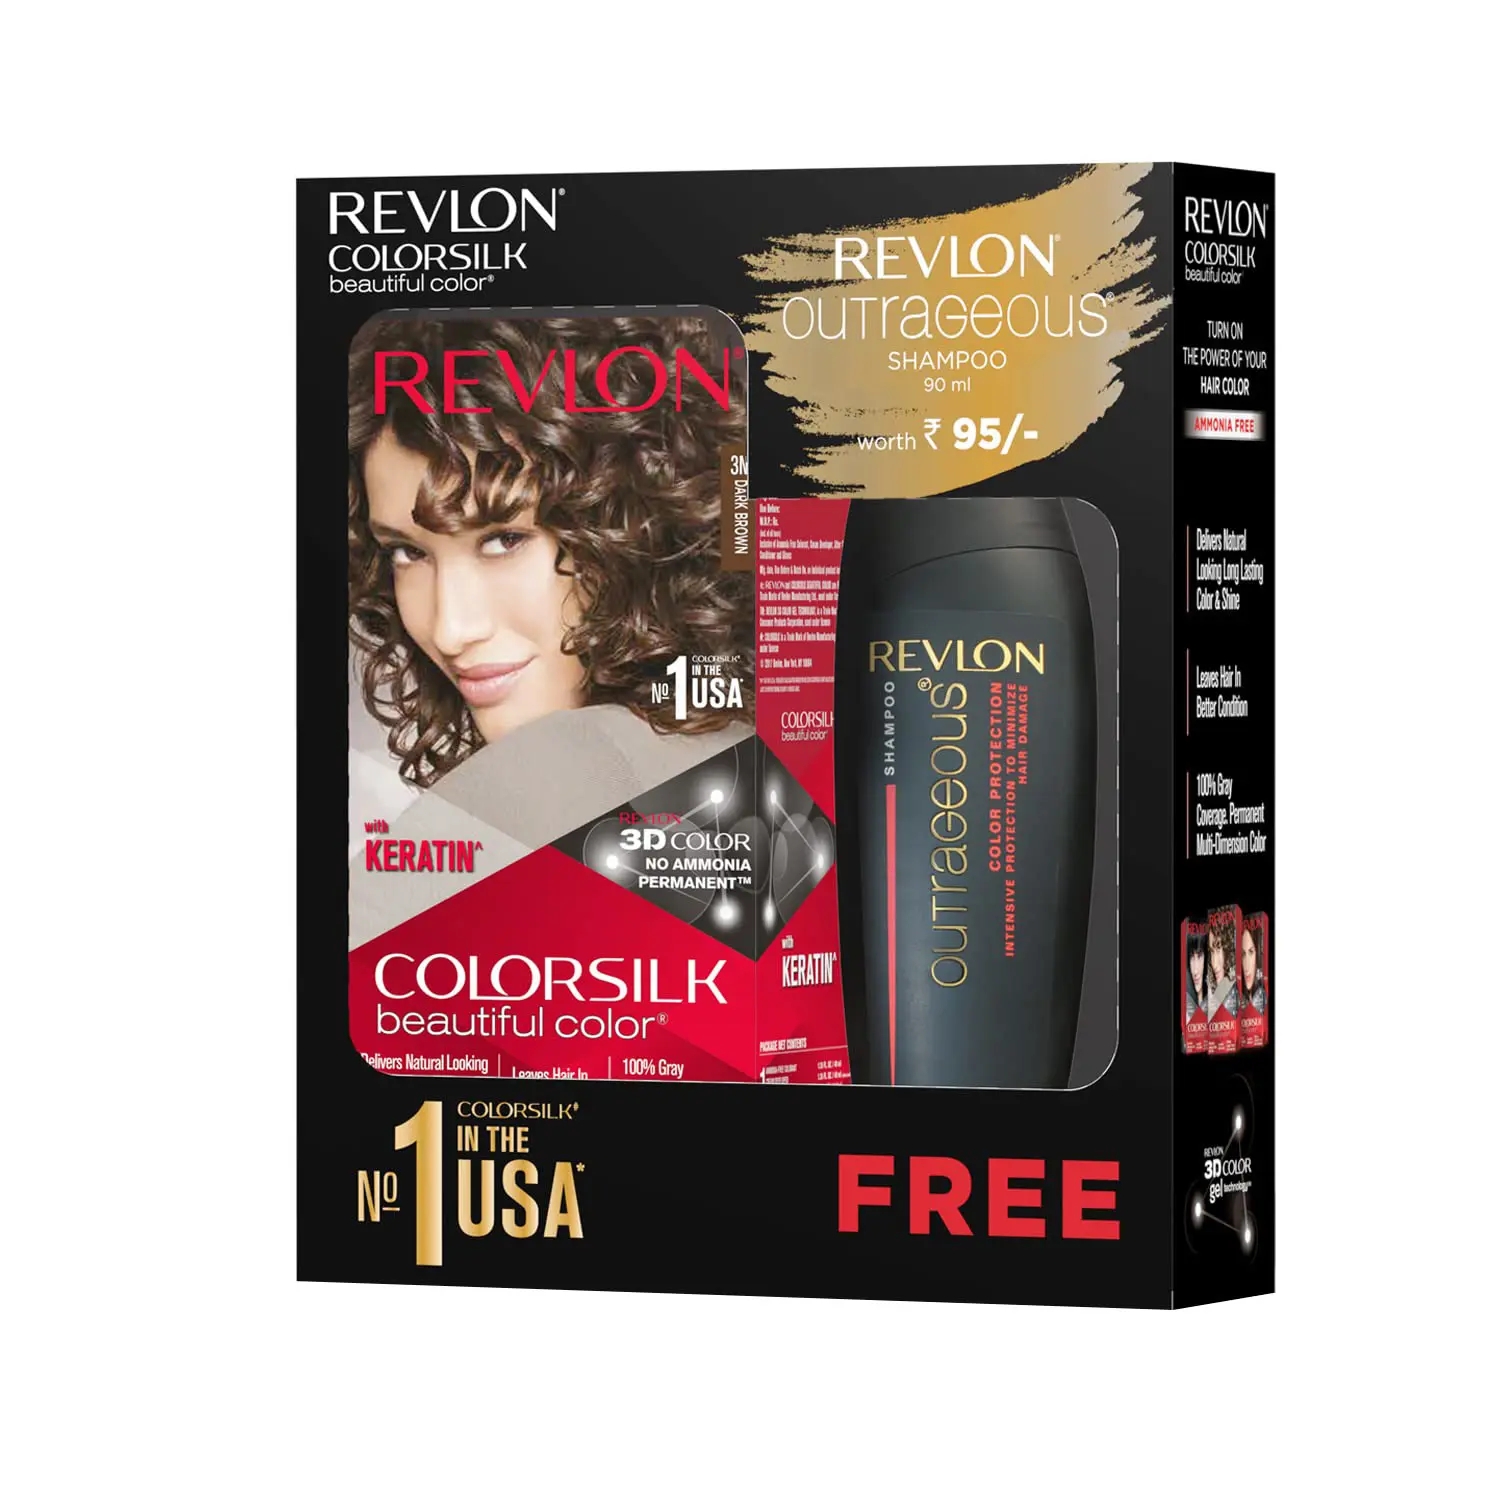 Revlon | Revlon ColorSilk Hair Color with Keratin - 3N Dark Brown - with Outrageous Shampoo 90 ml (150ml)